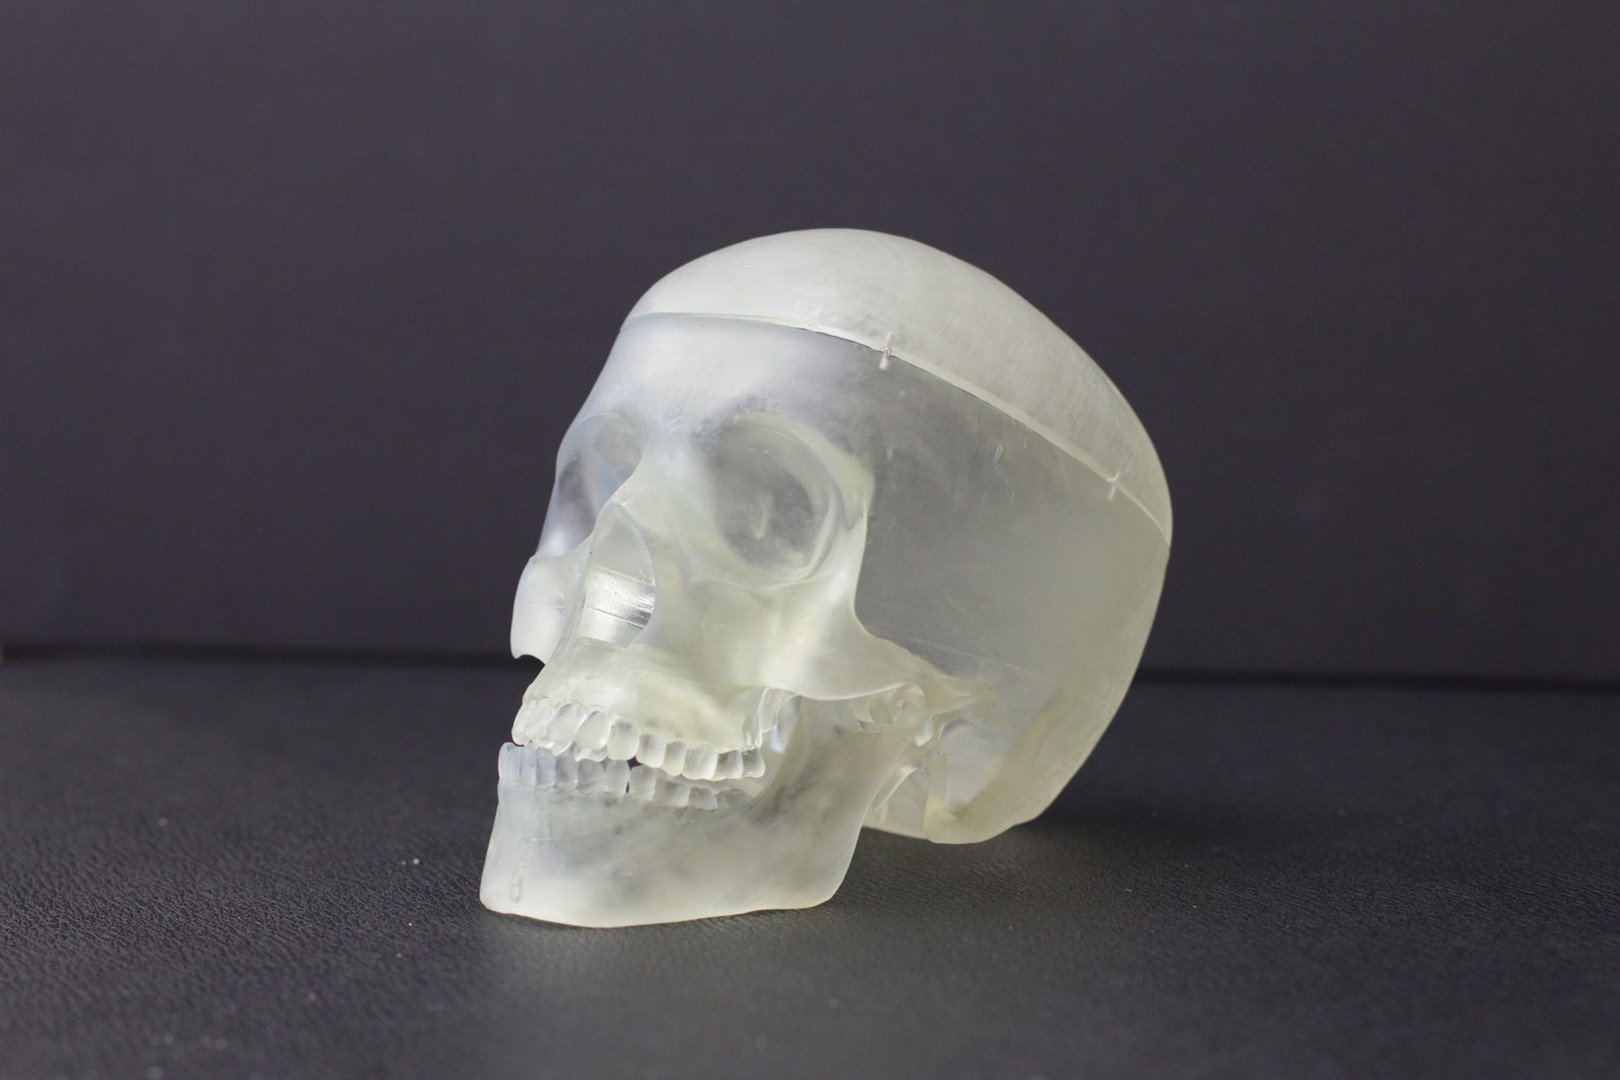 картинка 3D принтер Form 1 + Интернет-магазин «3DTool»